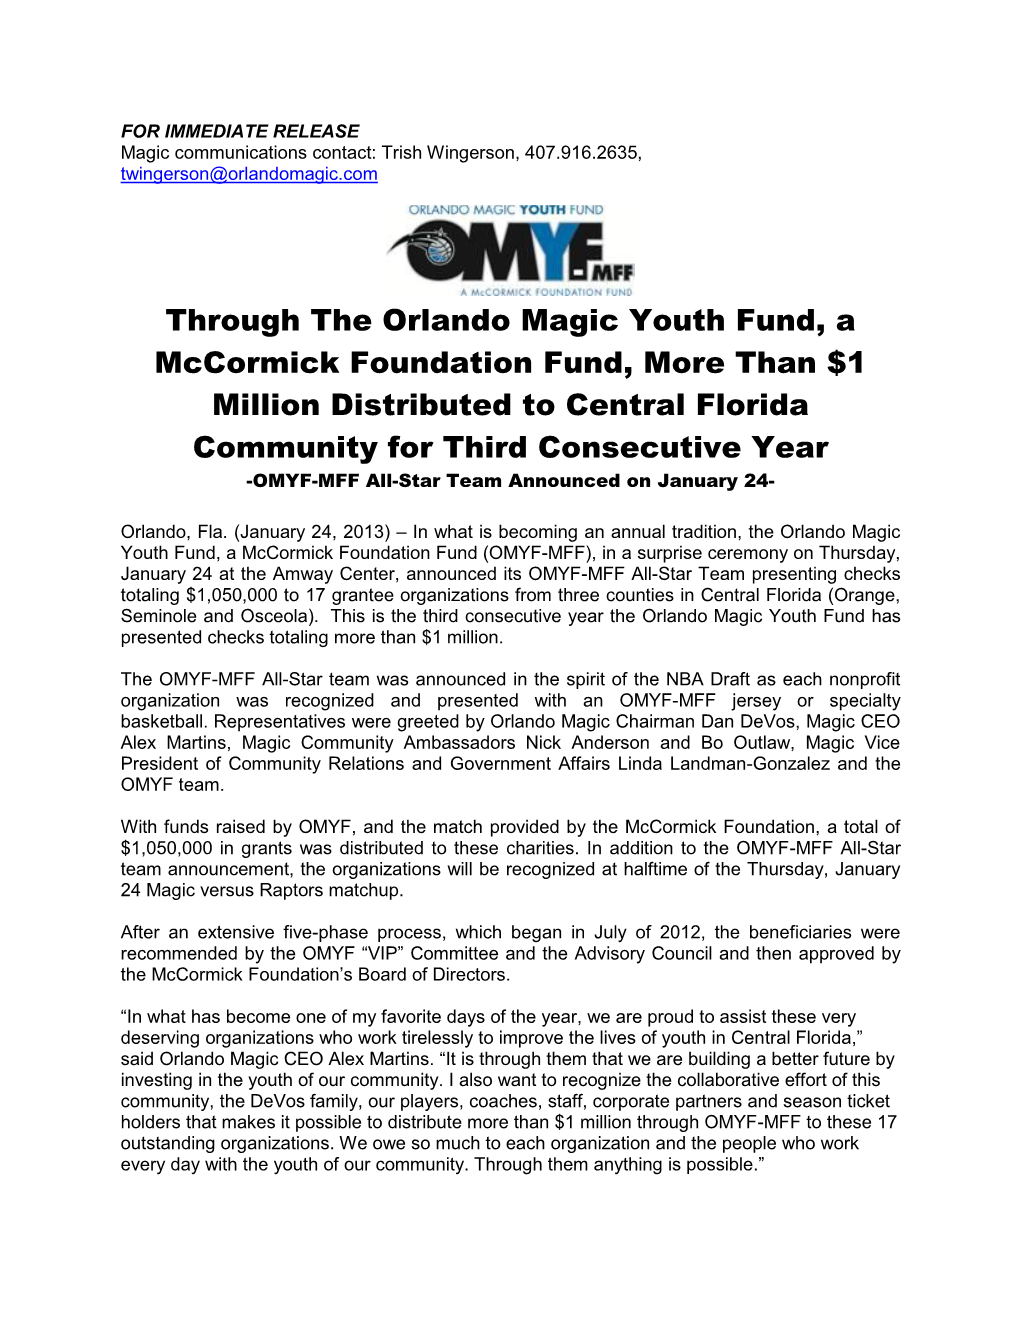 Through the Orlando Magic Youth Fund, a Mccormick Foundation